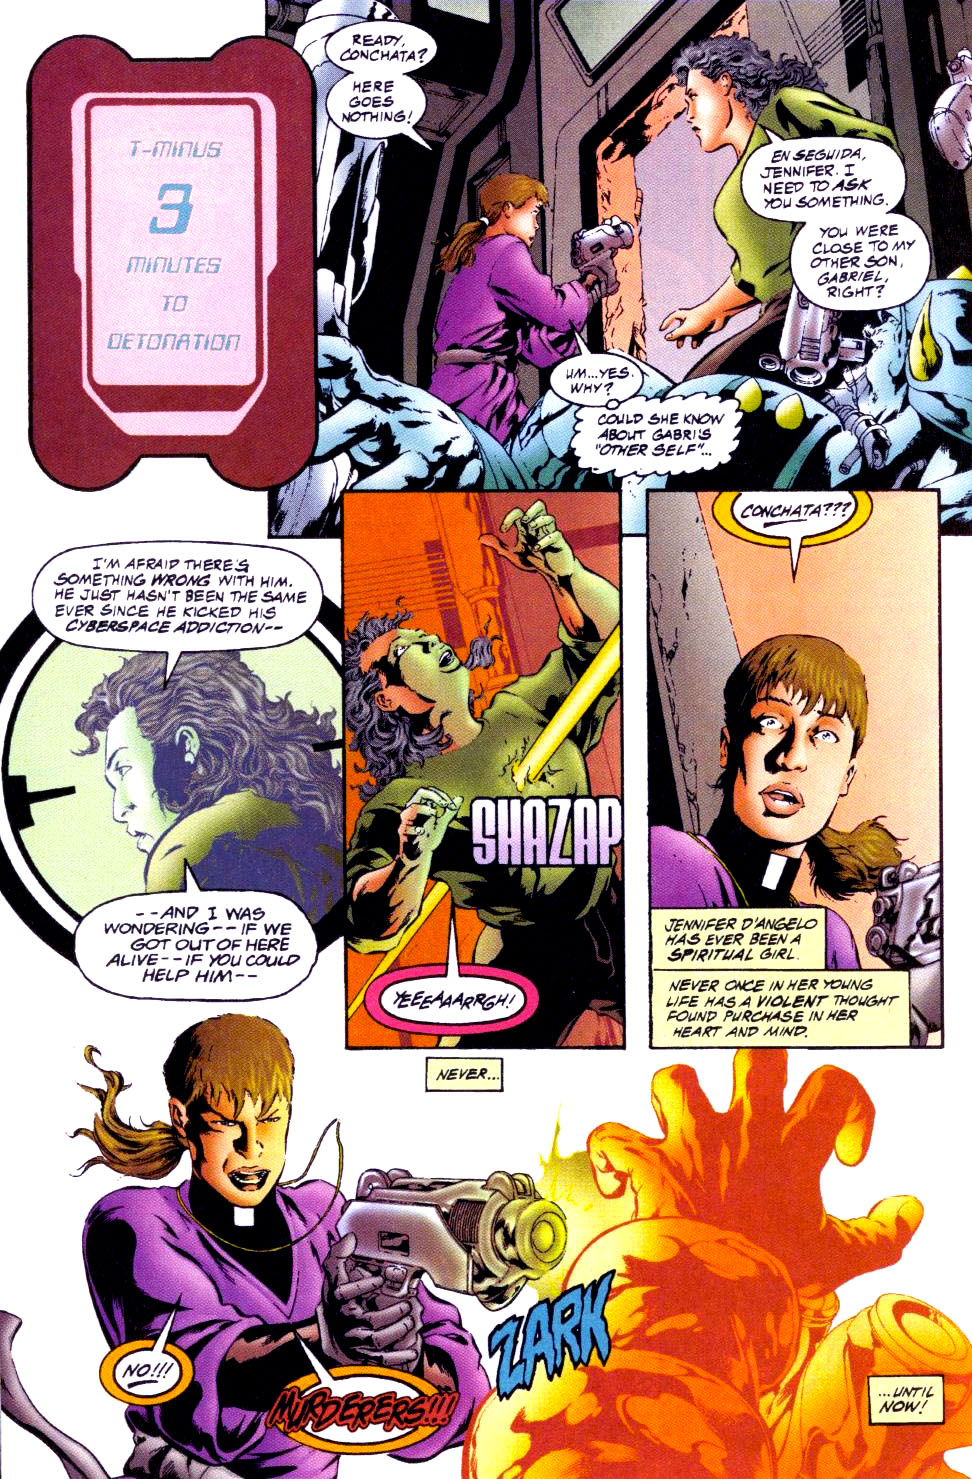 Spider-Man 2099 (1992) issue 46 - Page 21